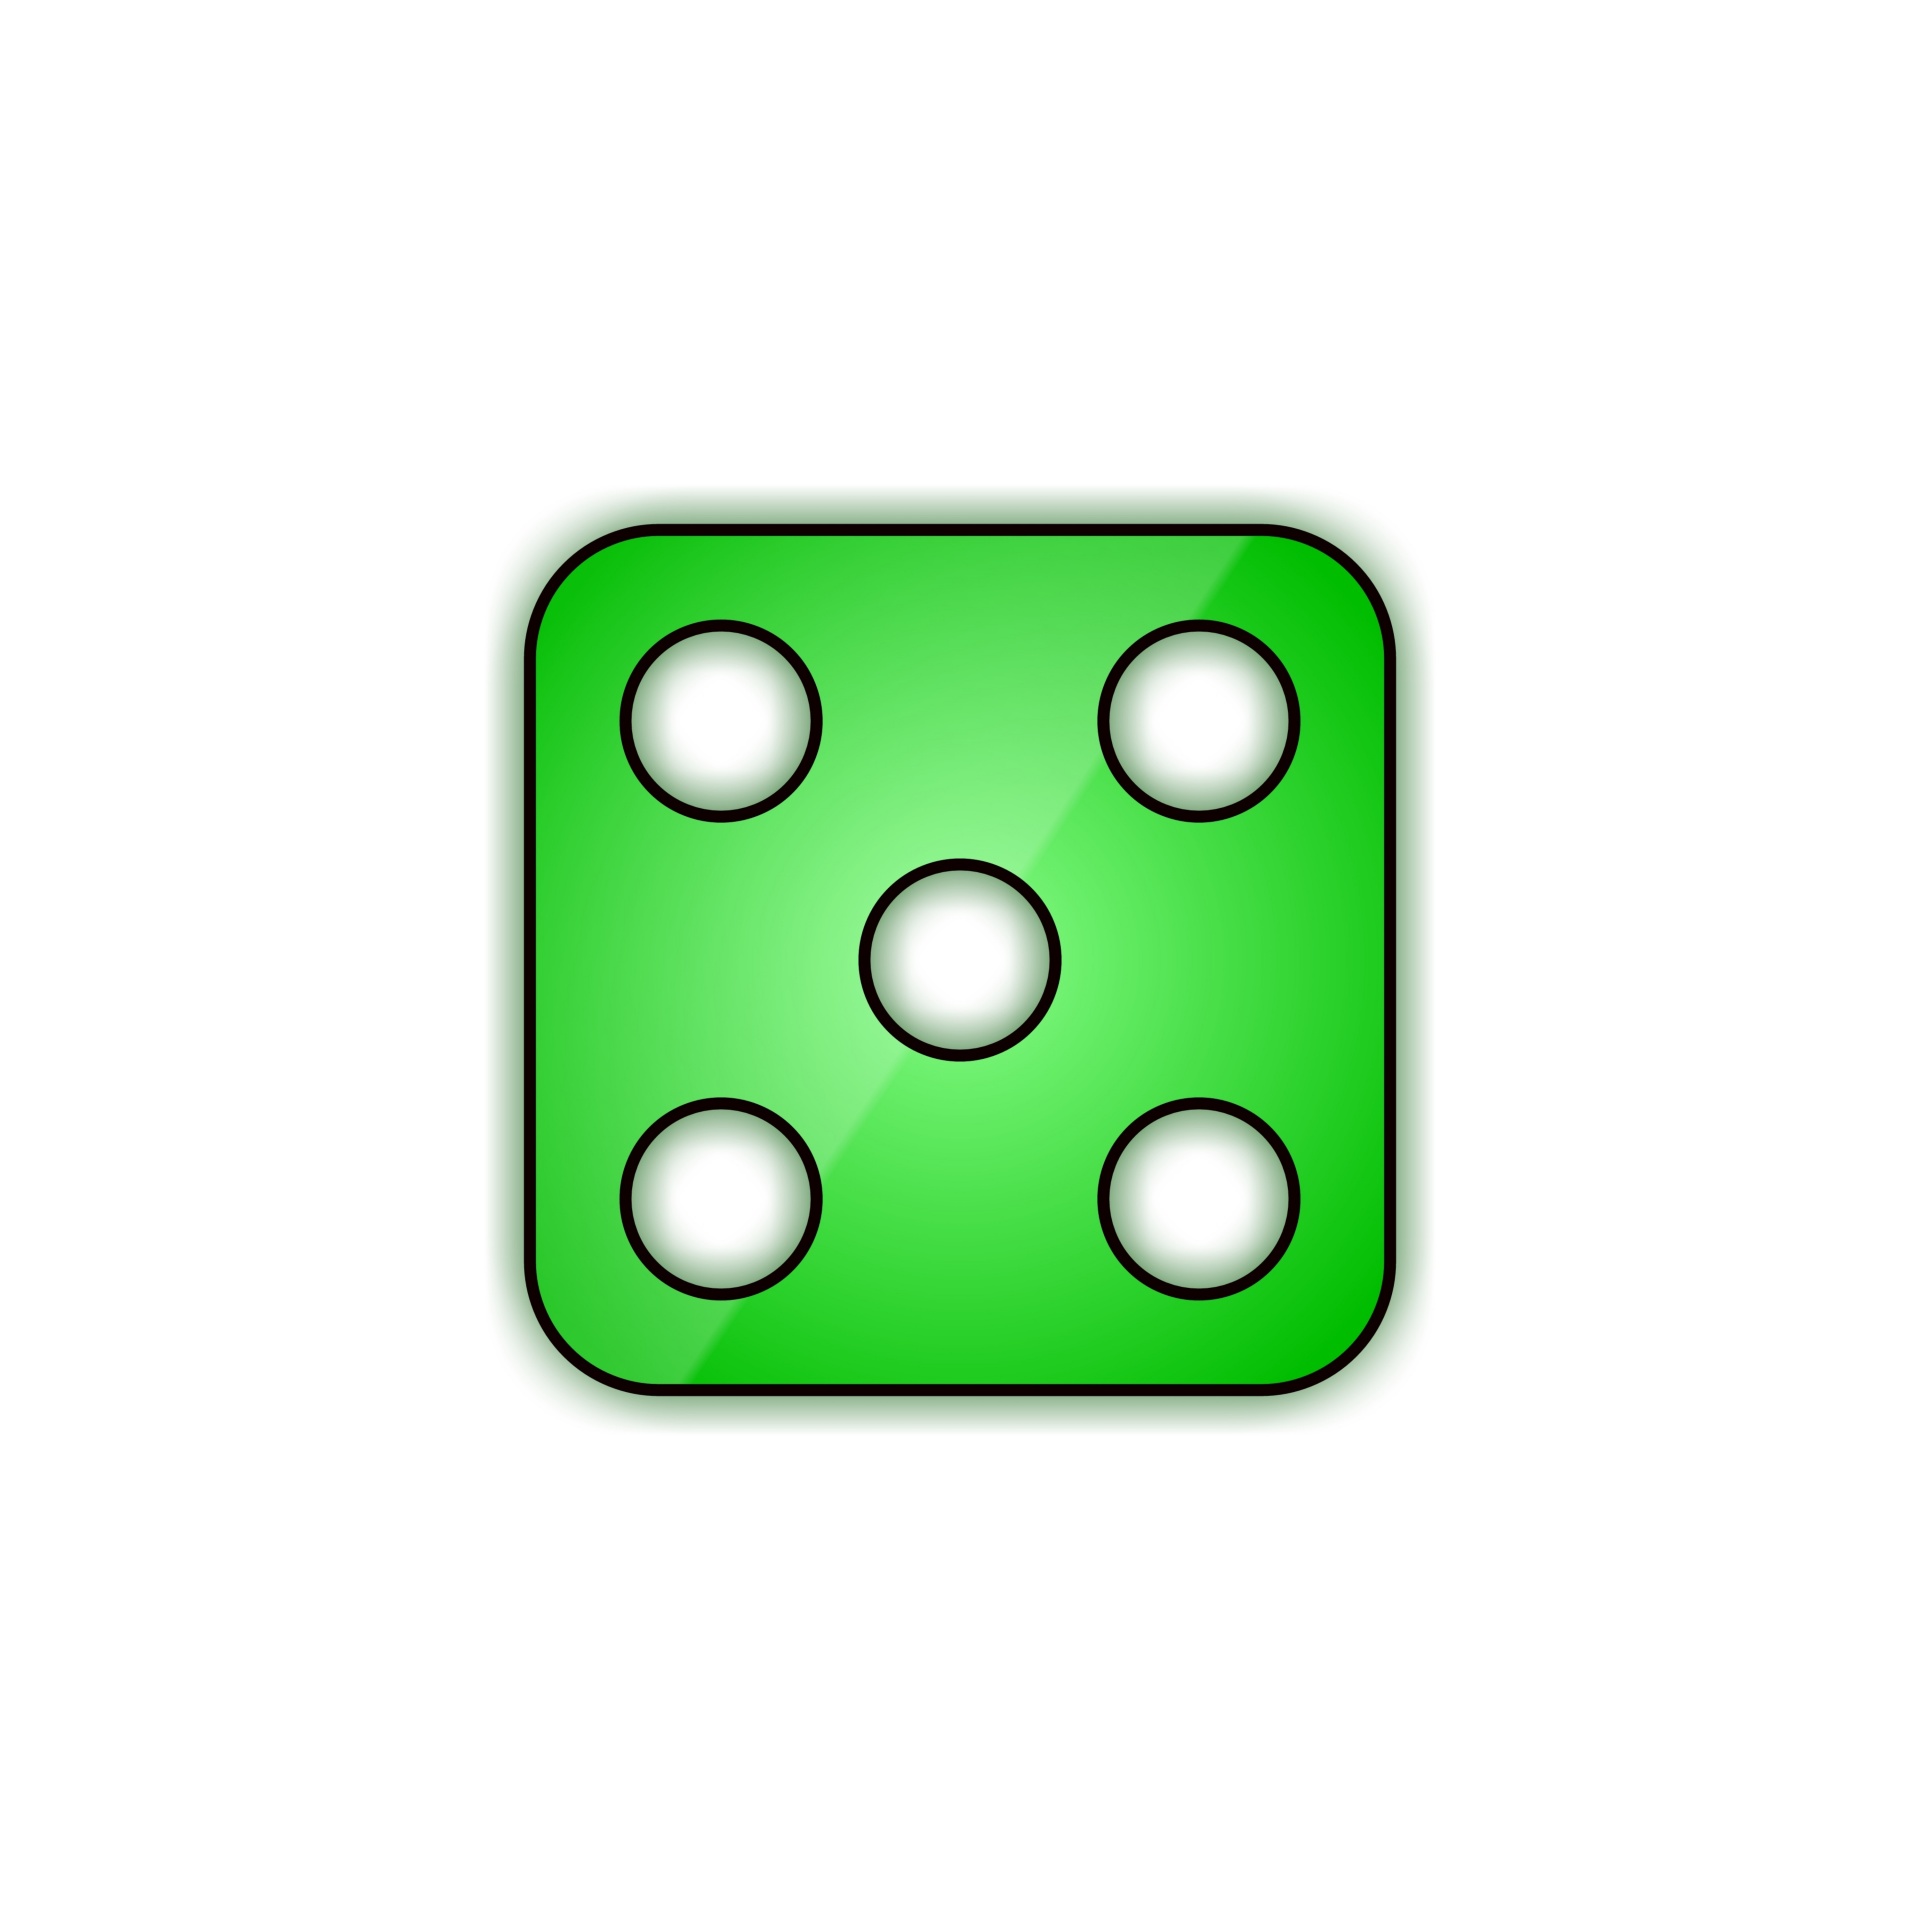 green dice drawing free photo